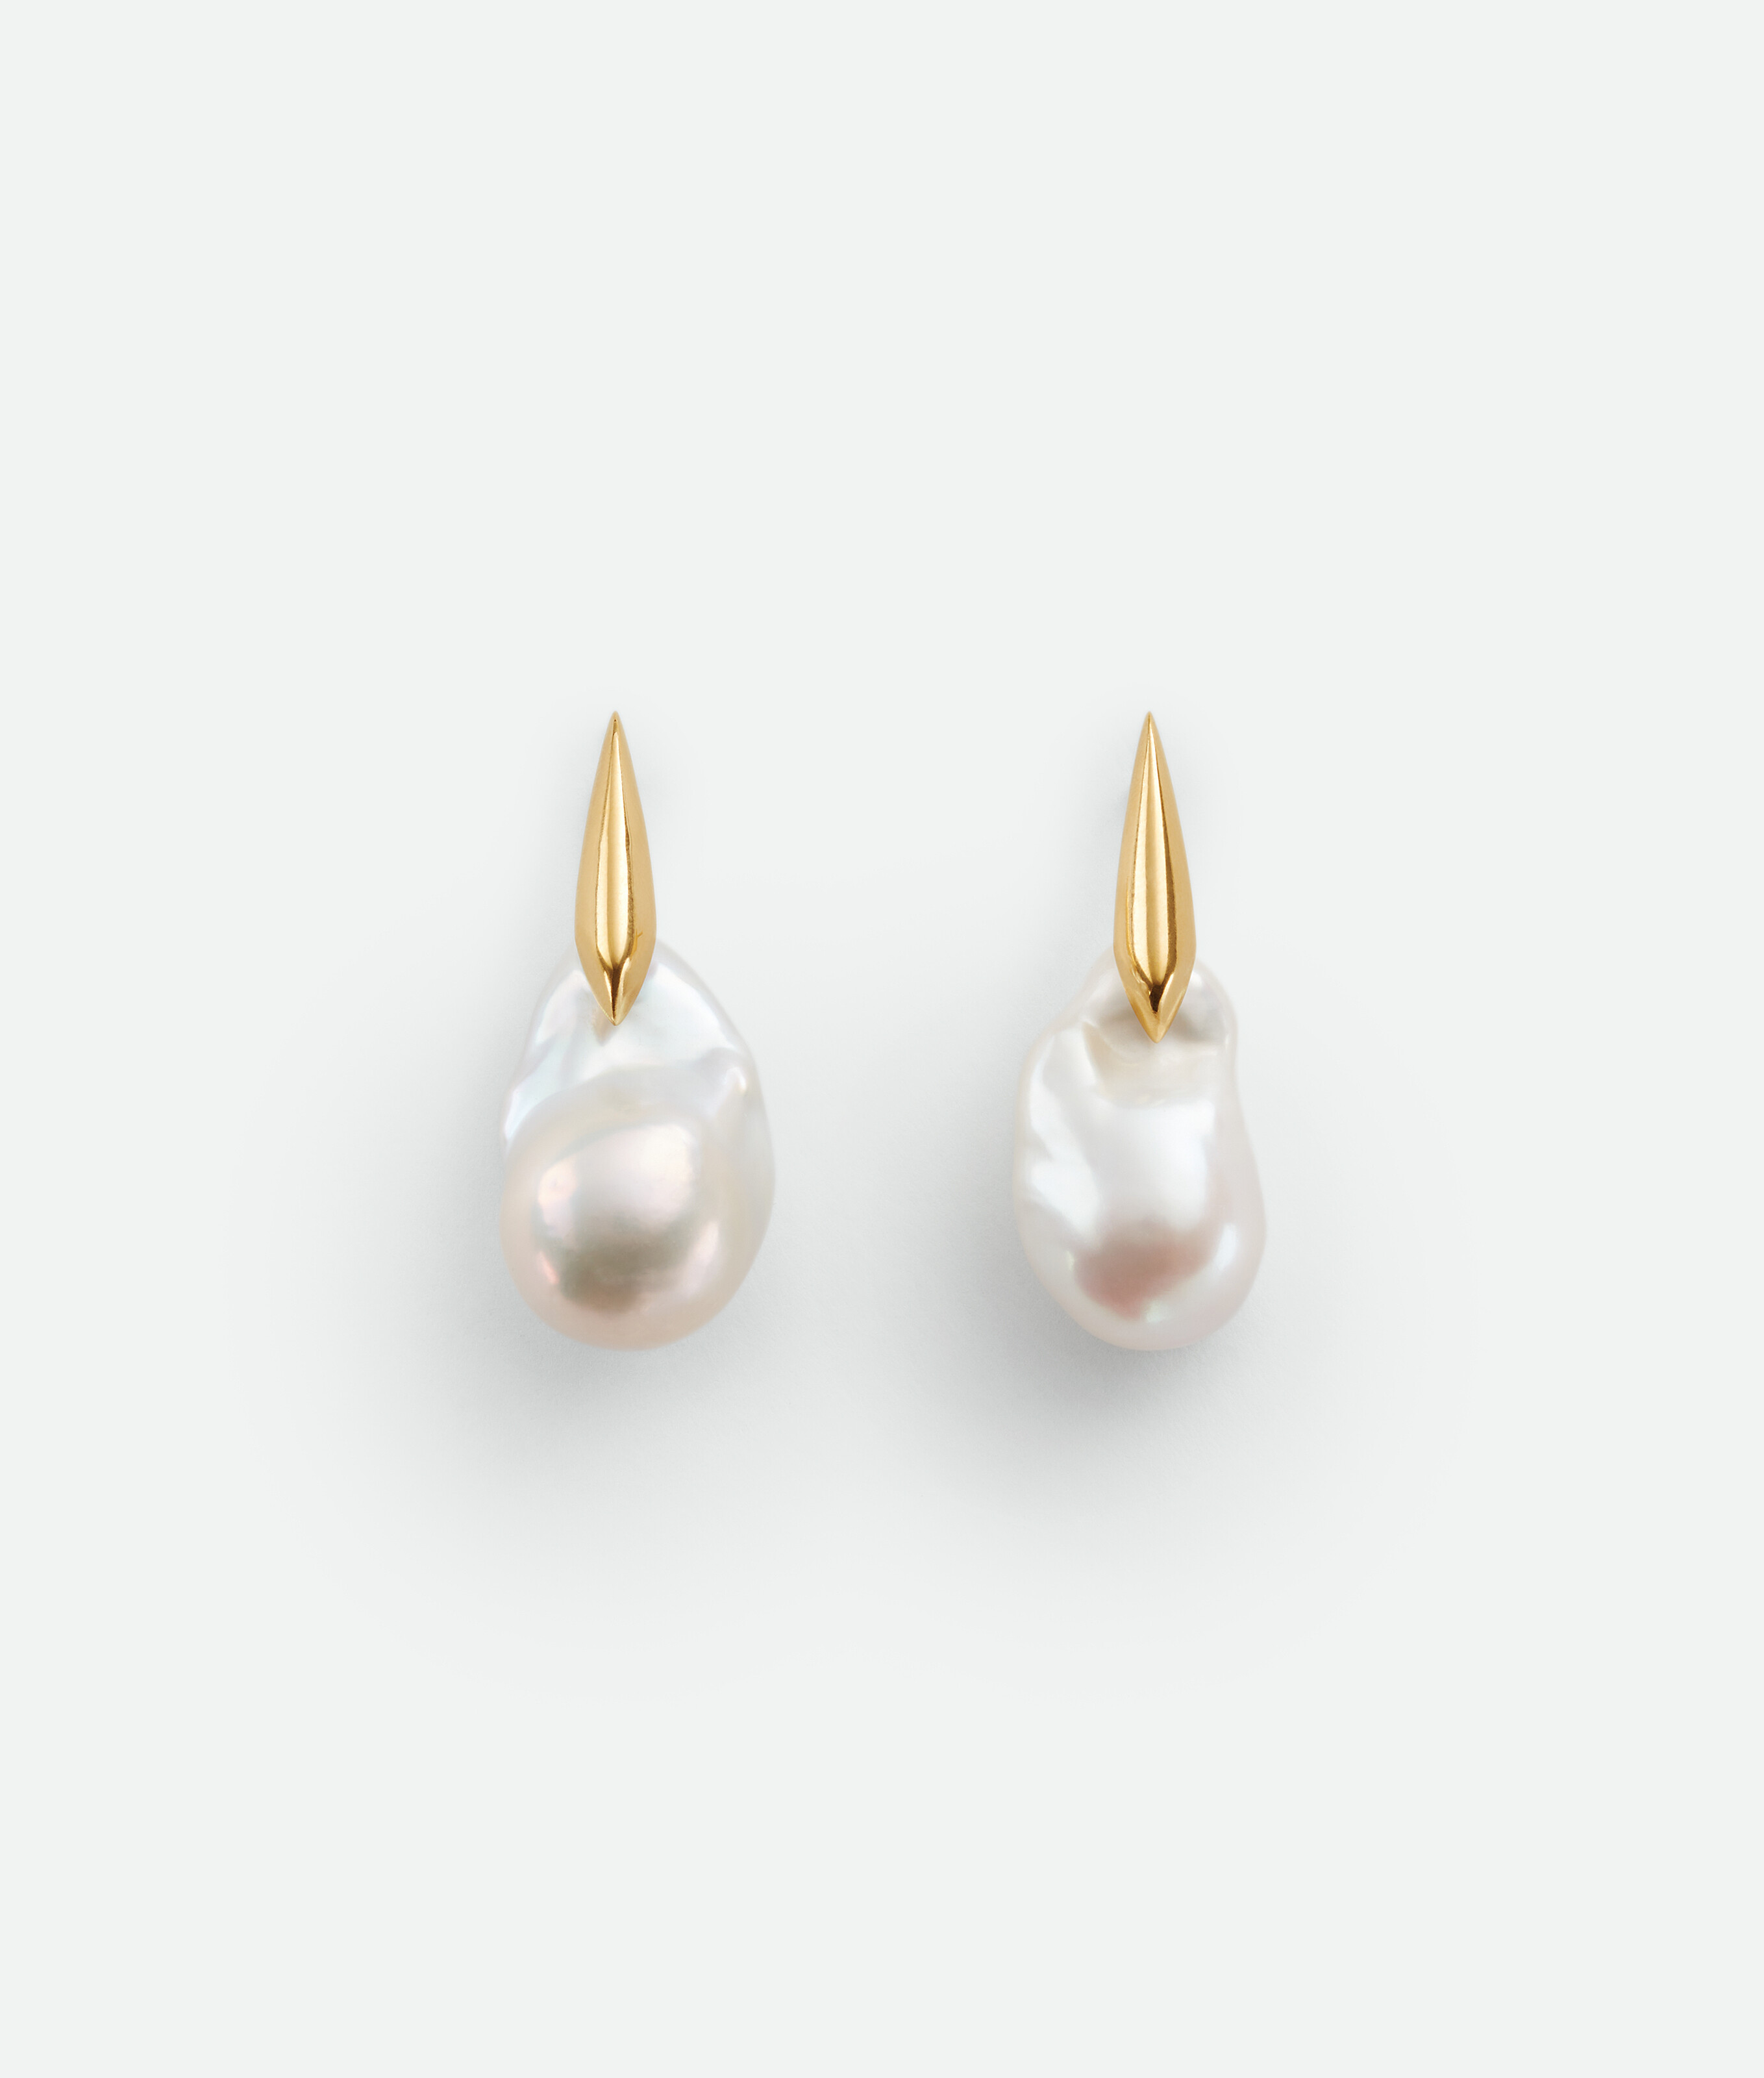 pearls